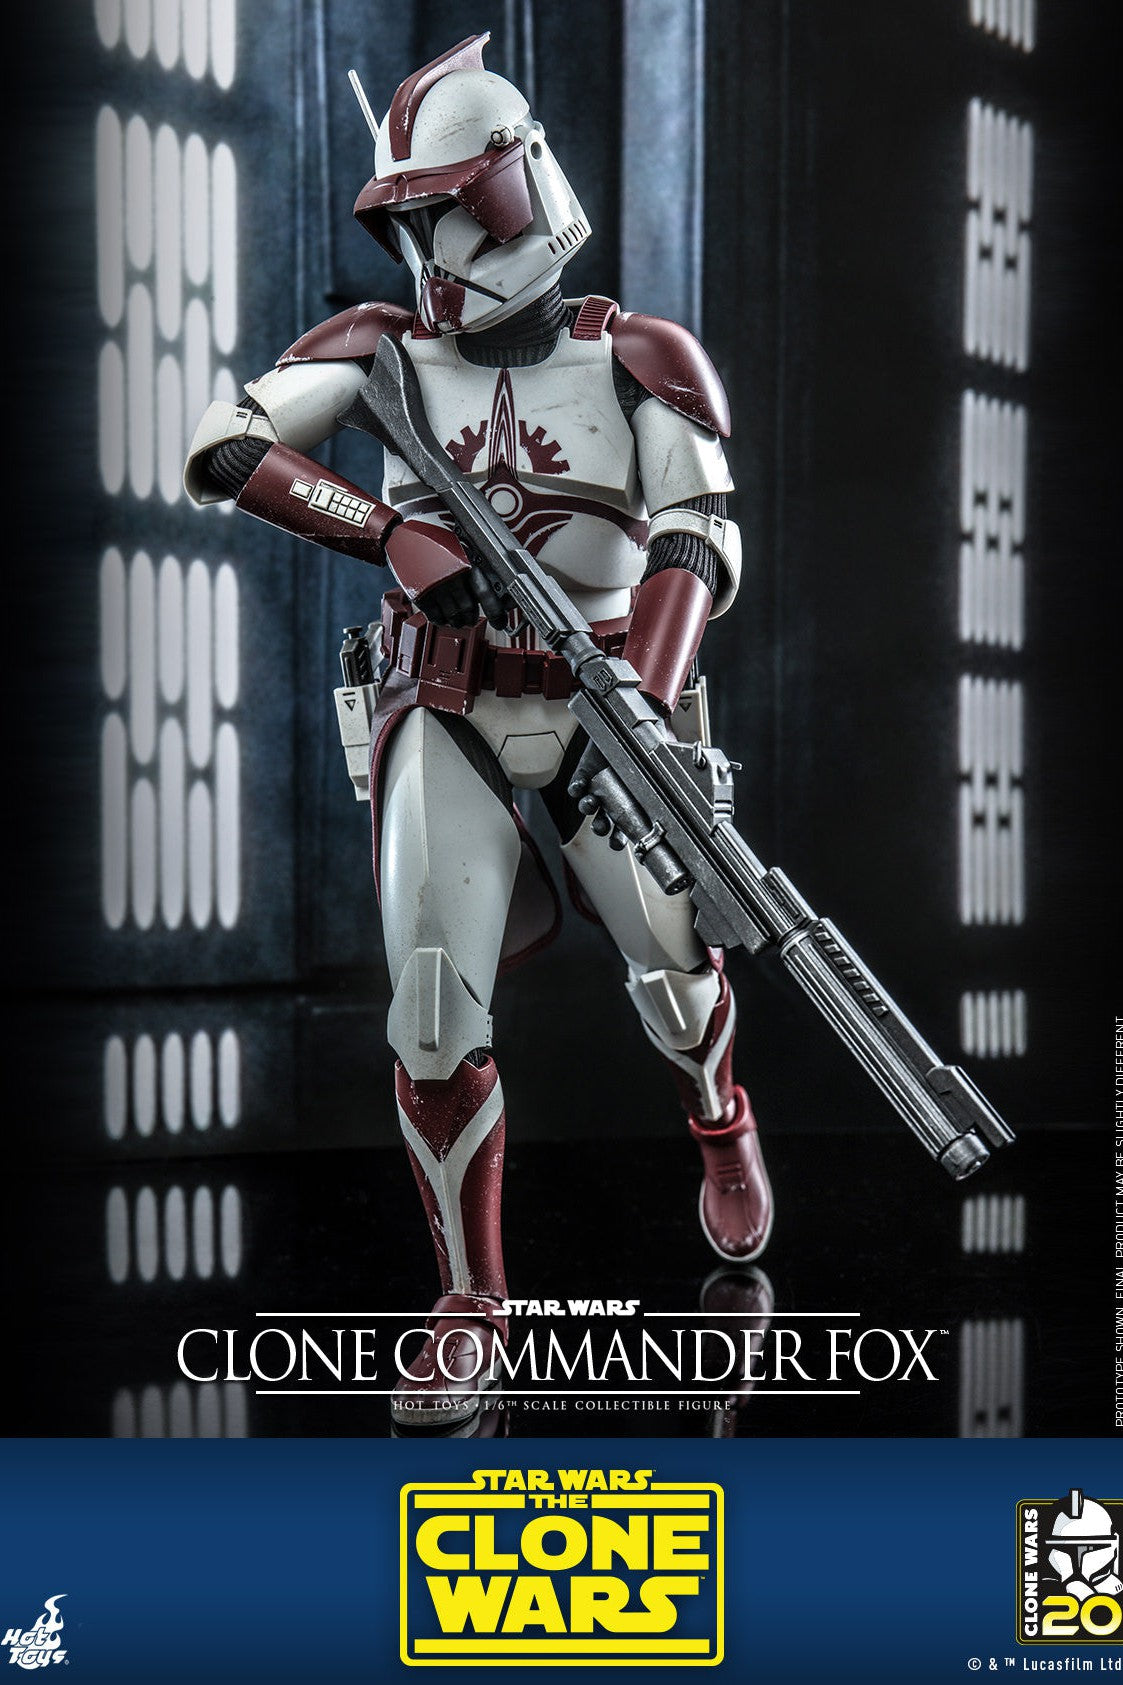 Clone Commander Fox: The Clone Wars: Star Wars